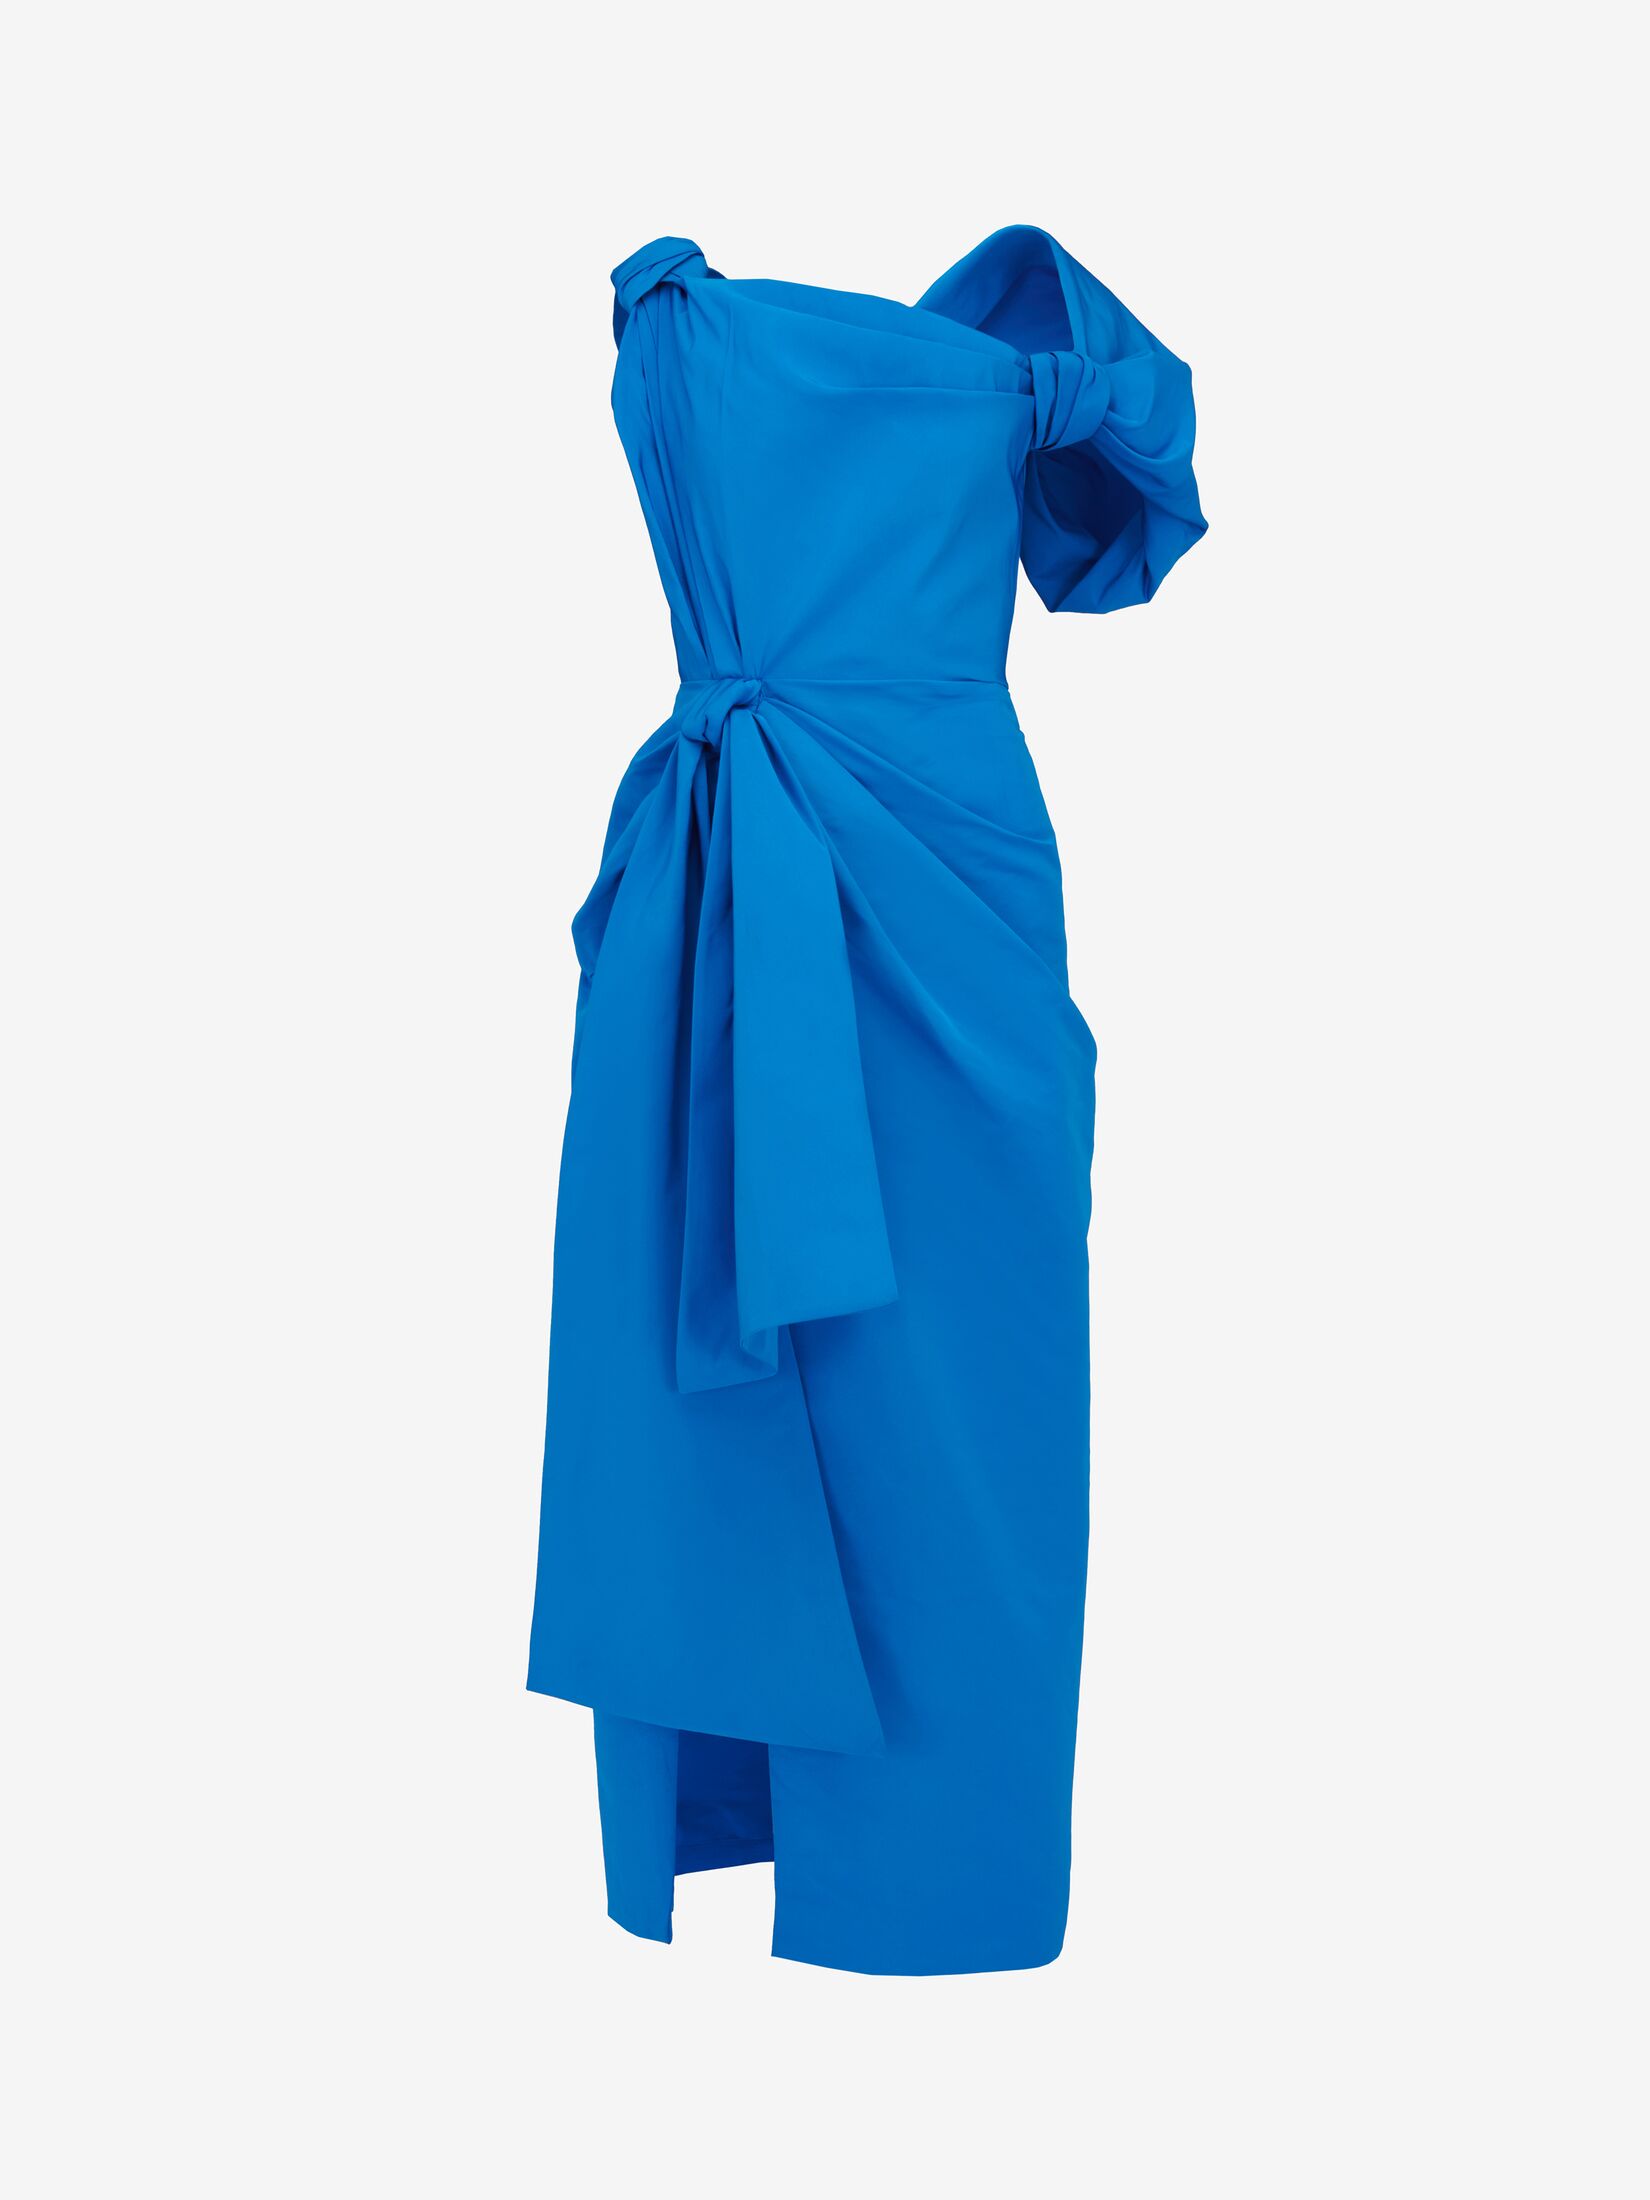 Knotted Asymmetric Pencil Dress in Lapis Blue - Alexander McQueen